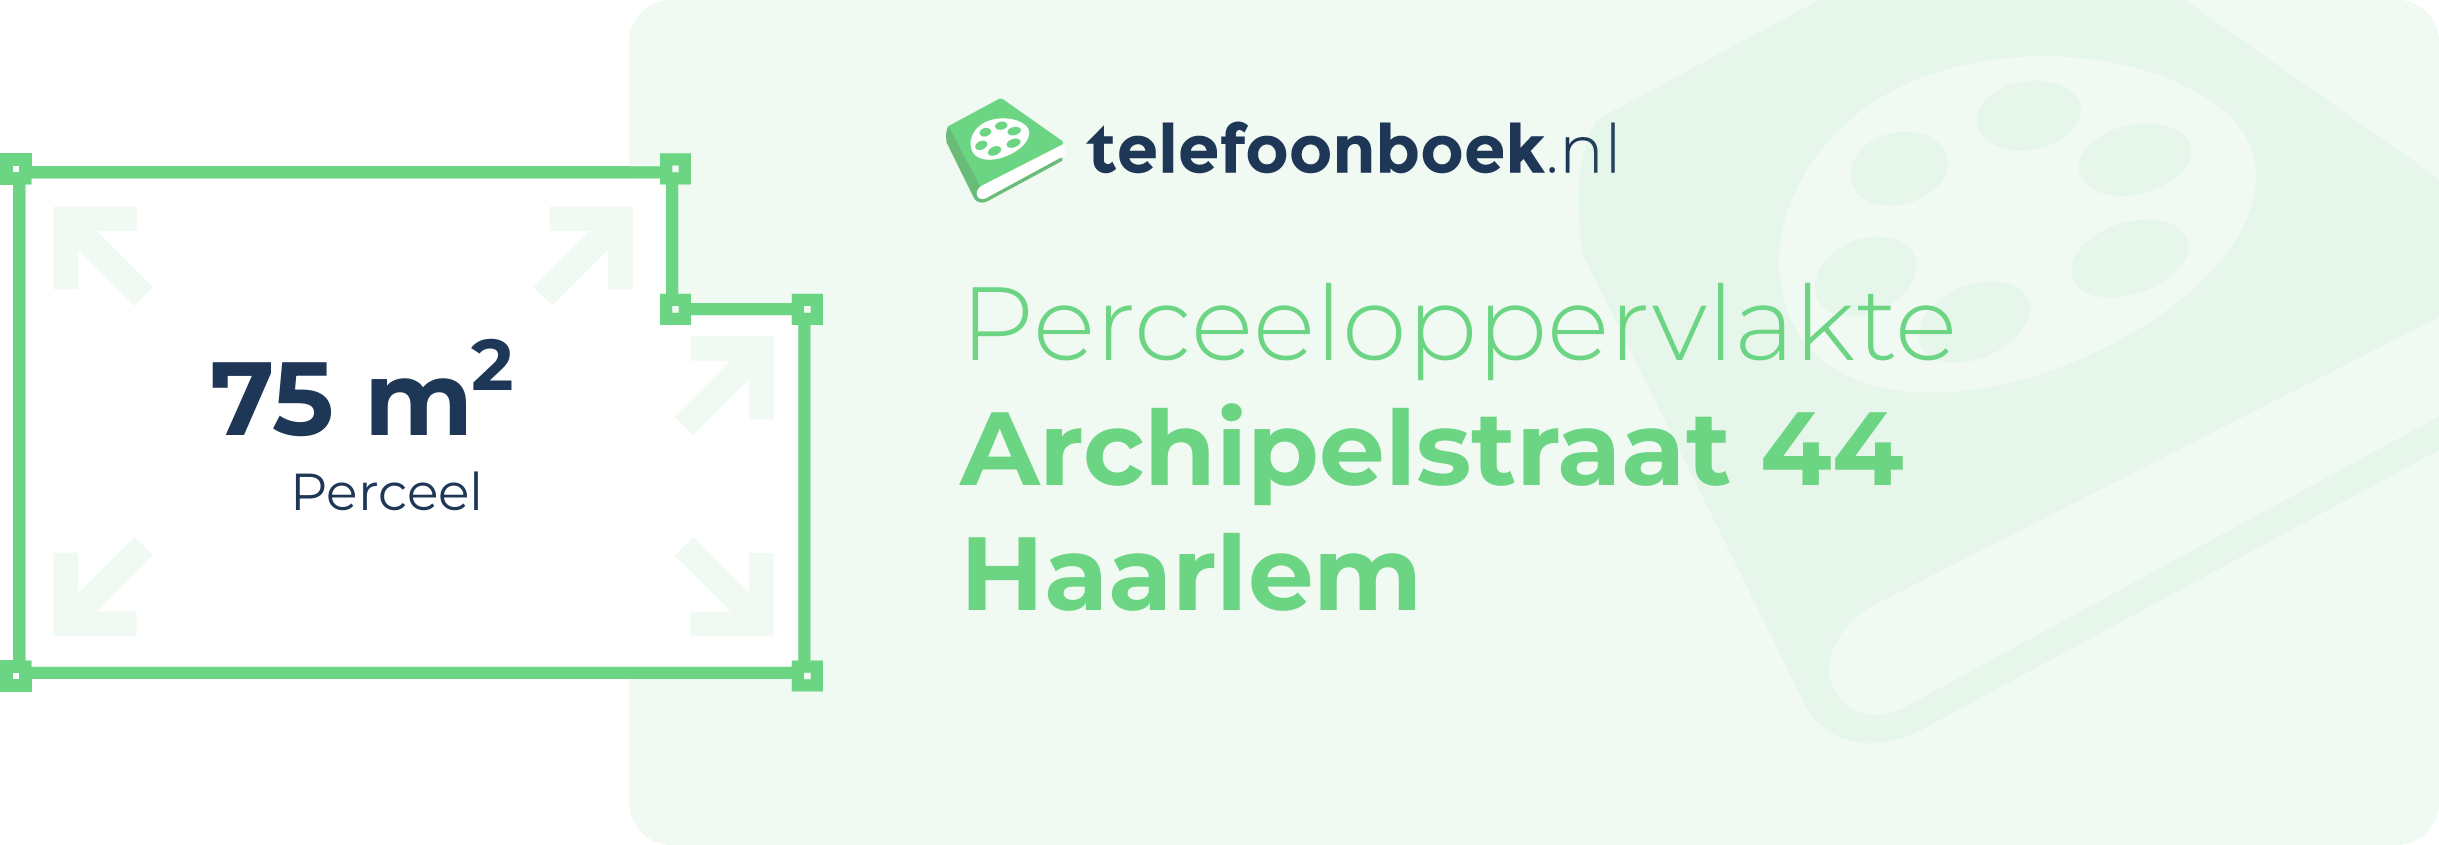 Perceeloppervlakte Archipelstraat 44 Haarlem